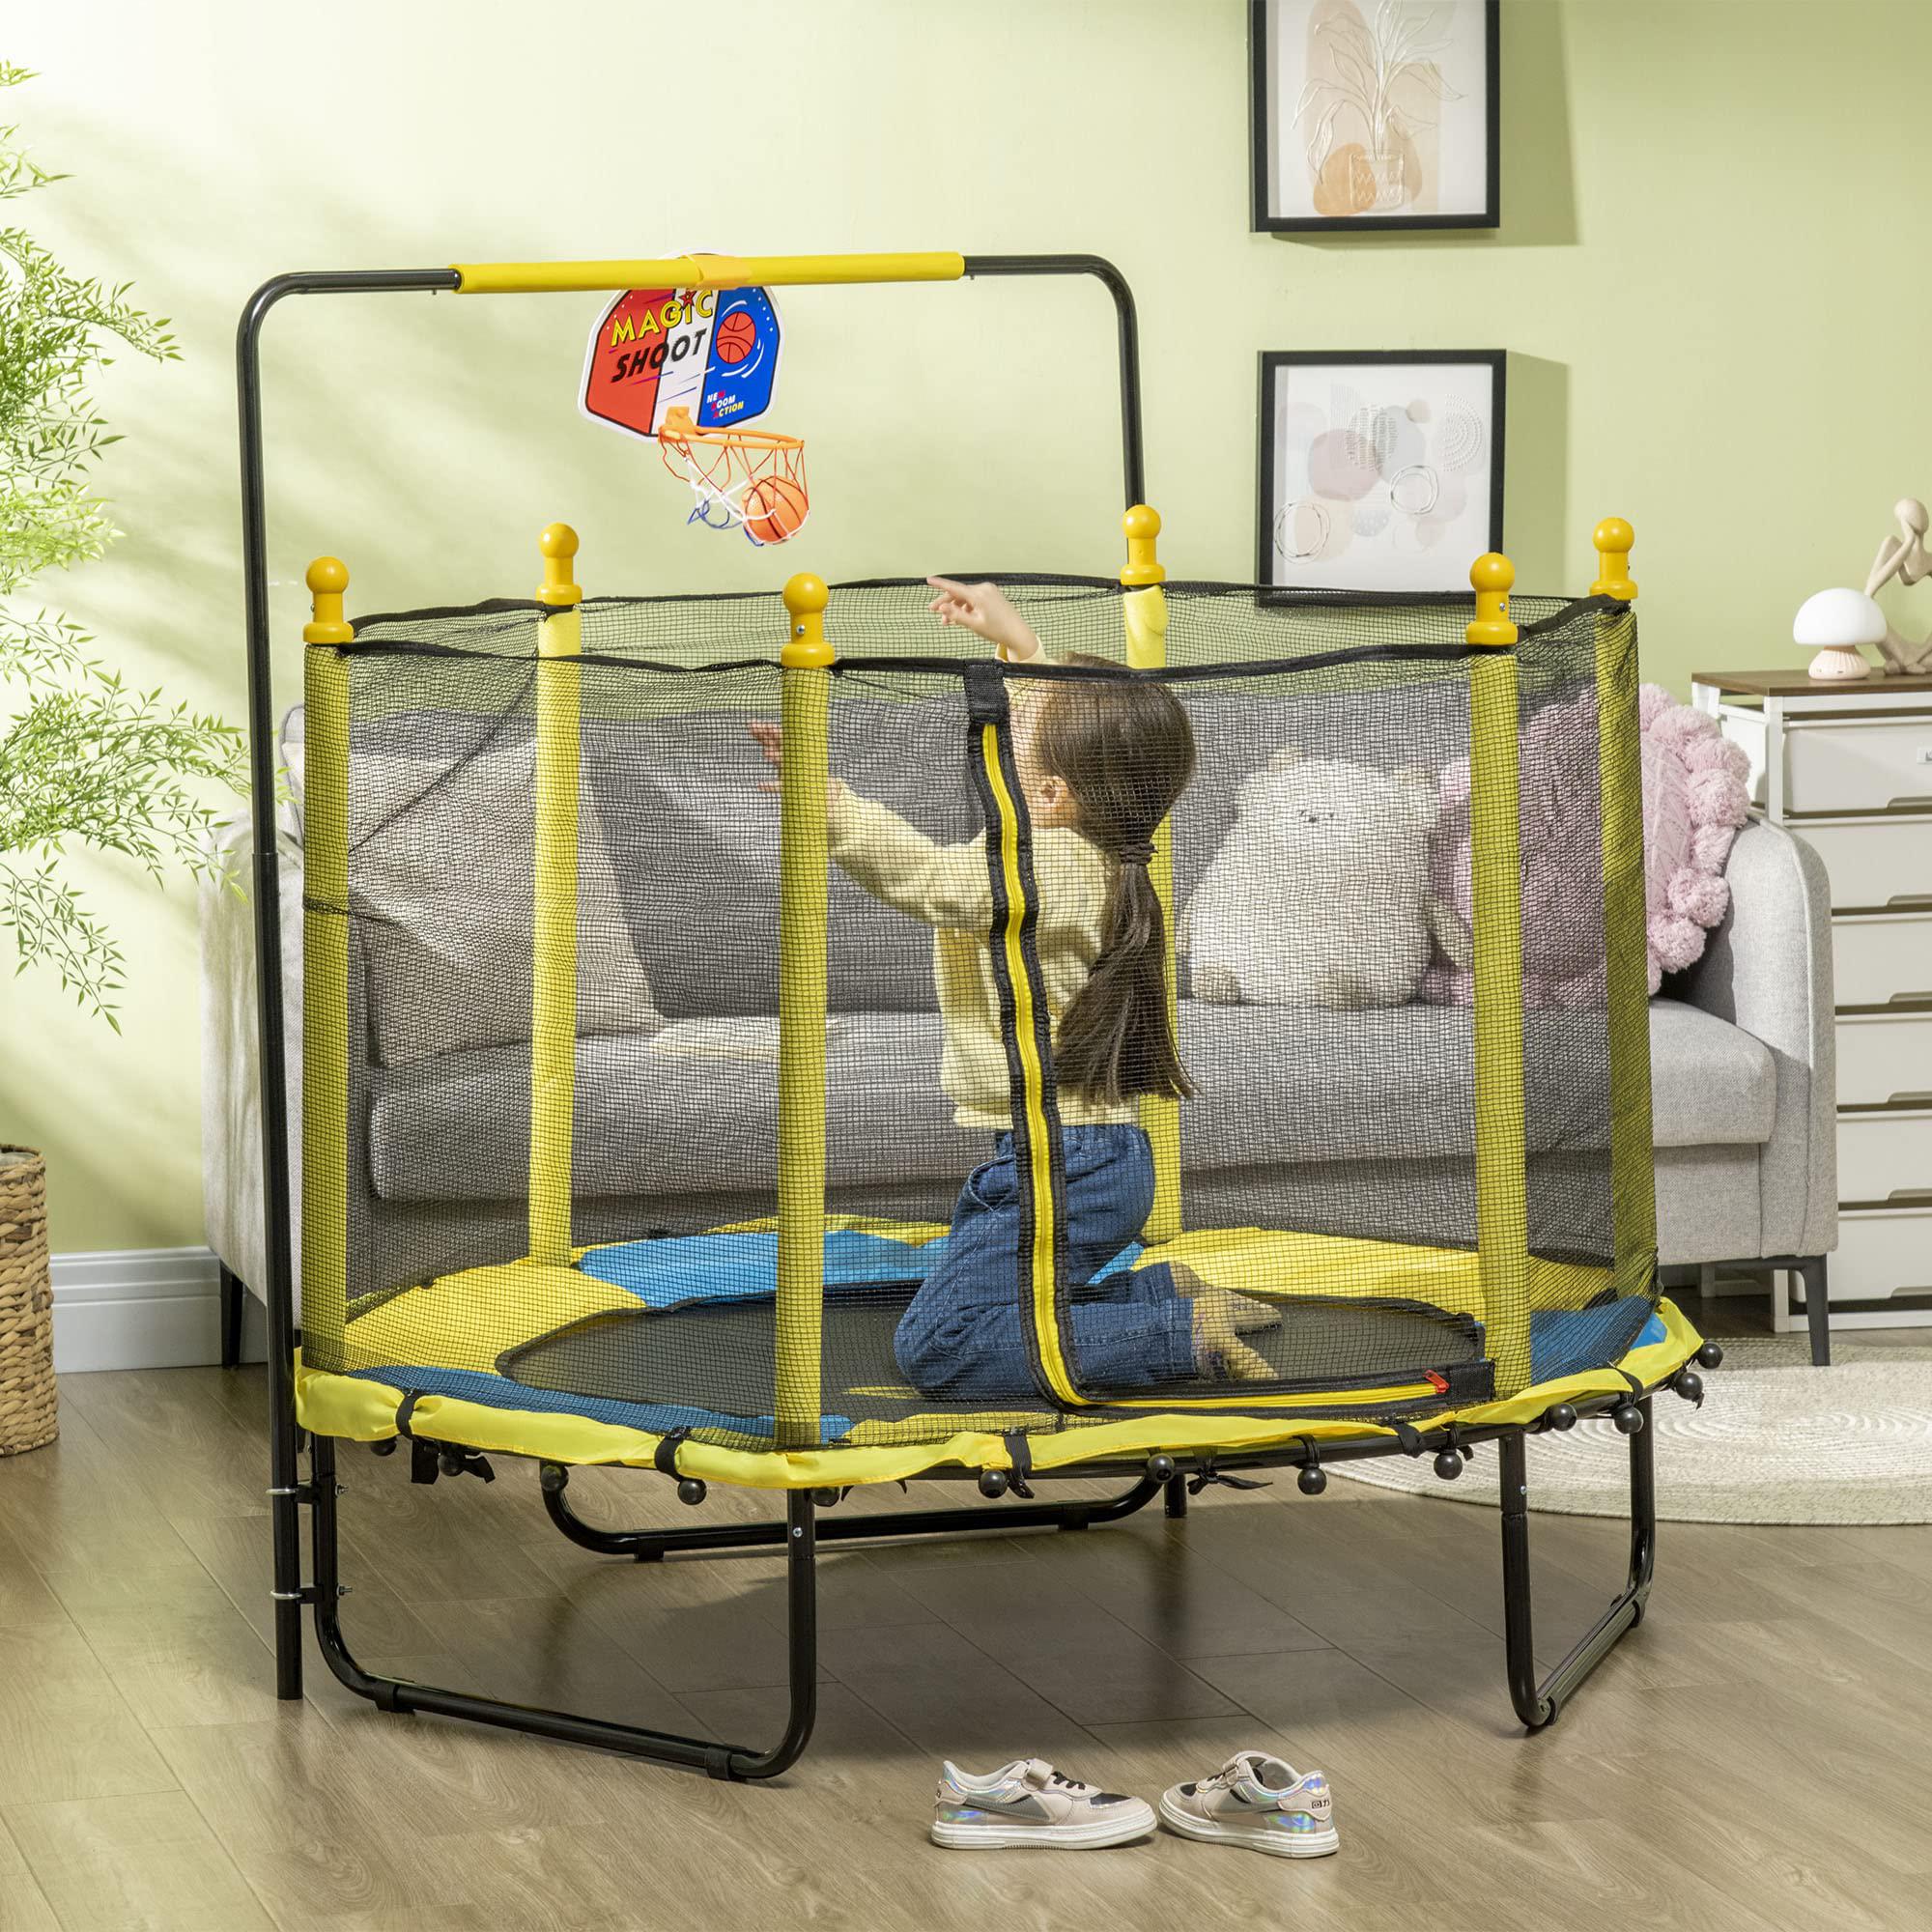 qaba 4.6' kids trampoline with basketball hoop, horizontal bar, 55" indoor trampoline with net, small springfree trampoline g